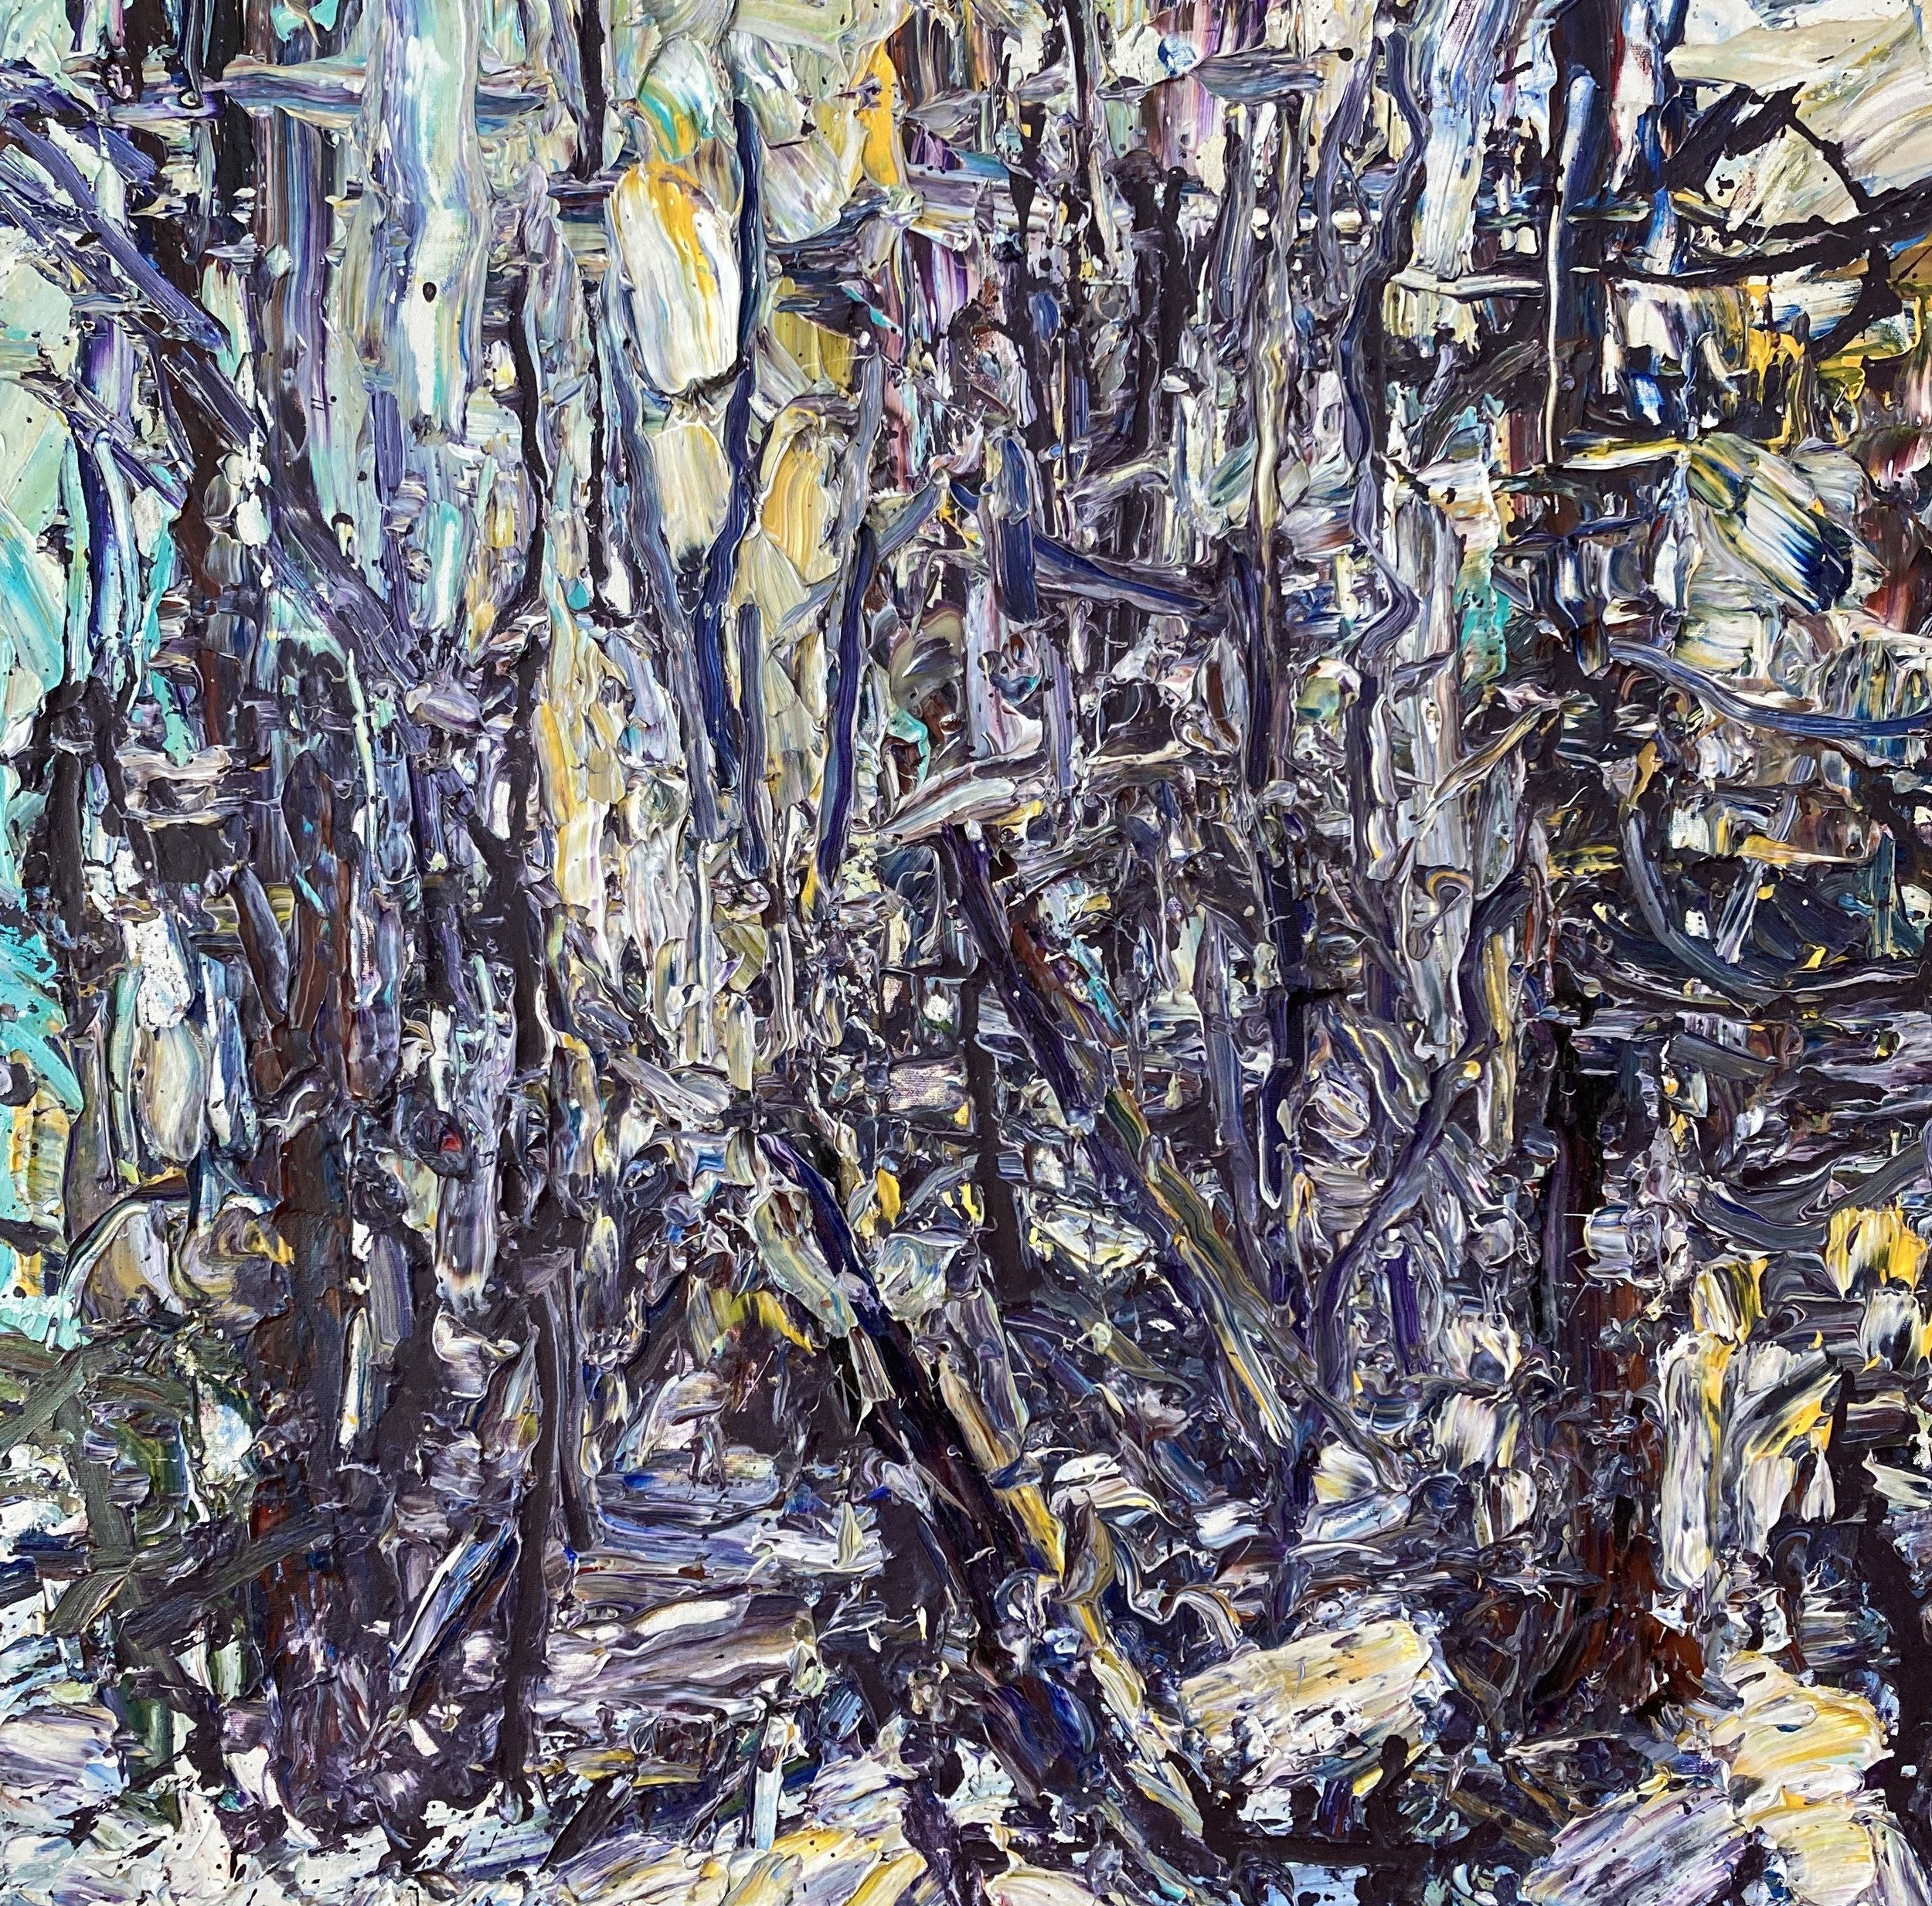    Forest 5-Feb-12     2012  acrylic on canvas  30”x30”  $4,200 